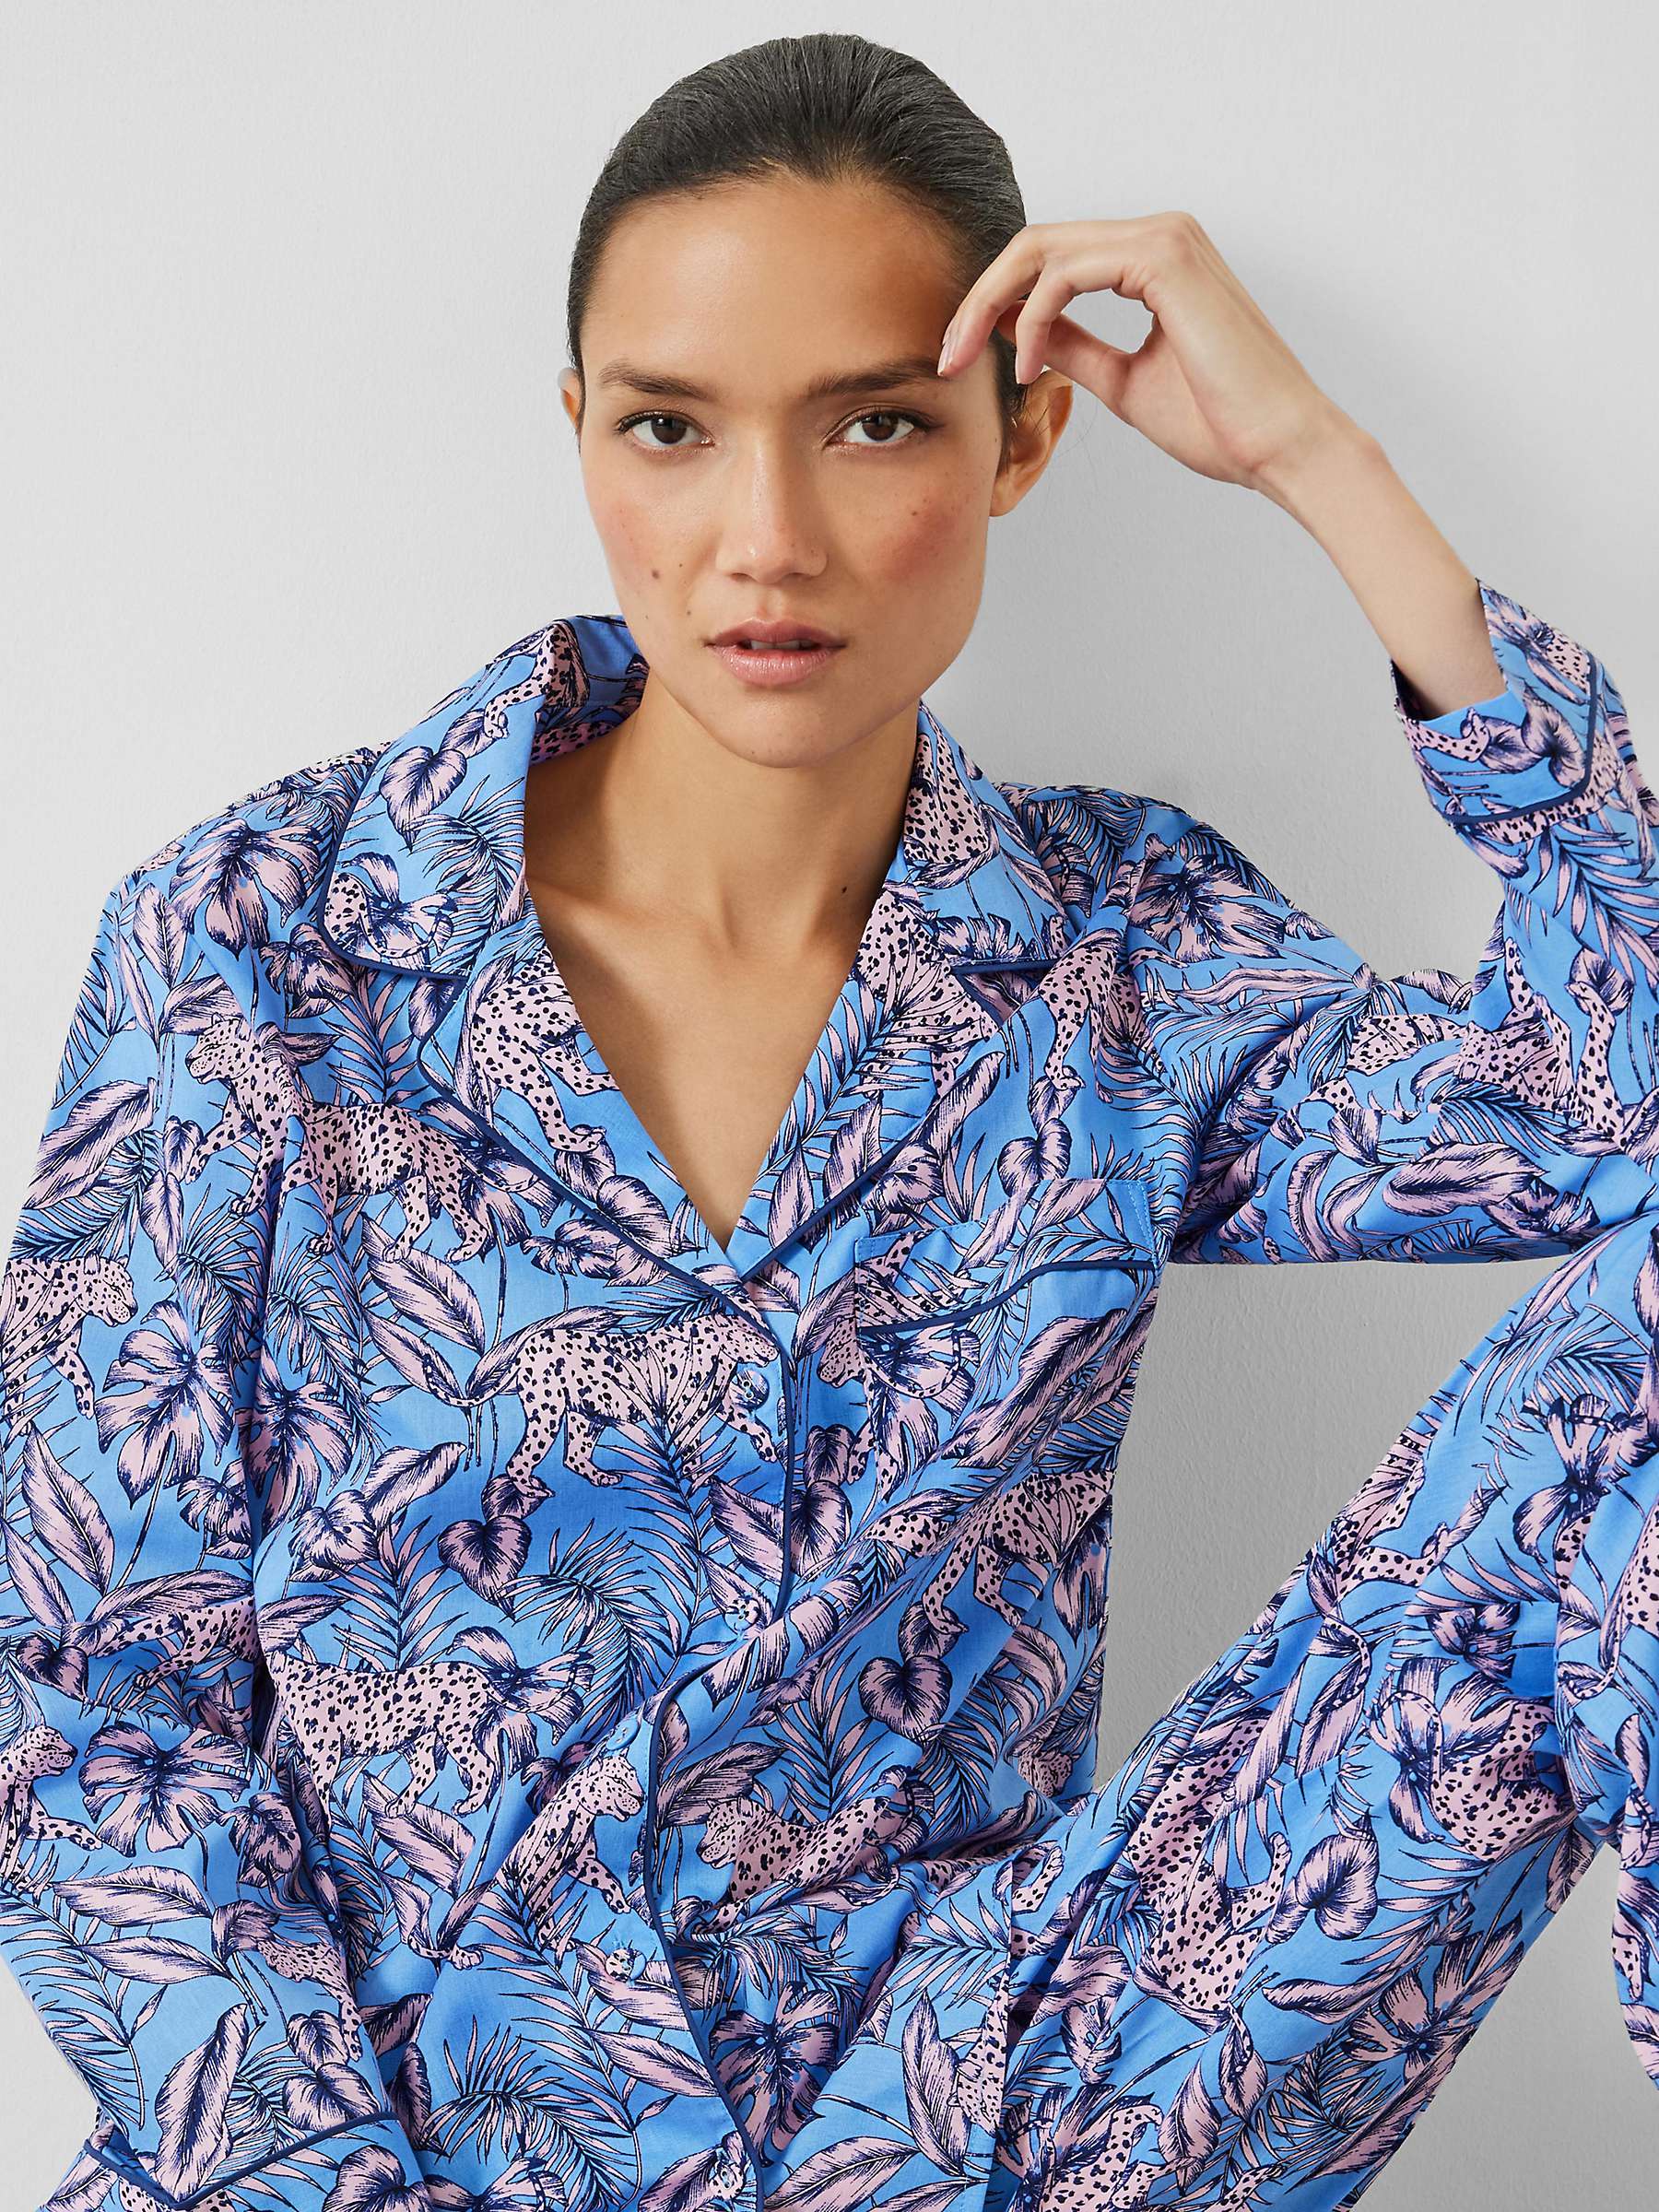 HUSH Isla Printed Cotton Pyjama Set, Pink/Blue at John Lewis & Partners